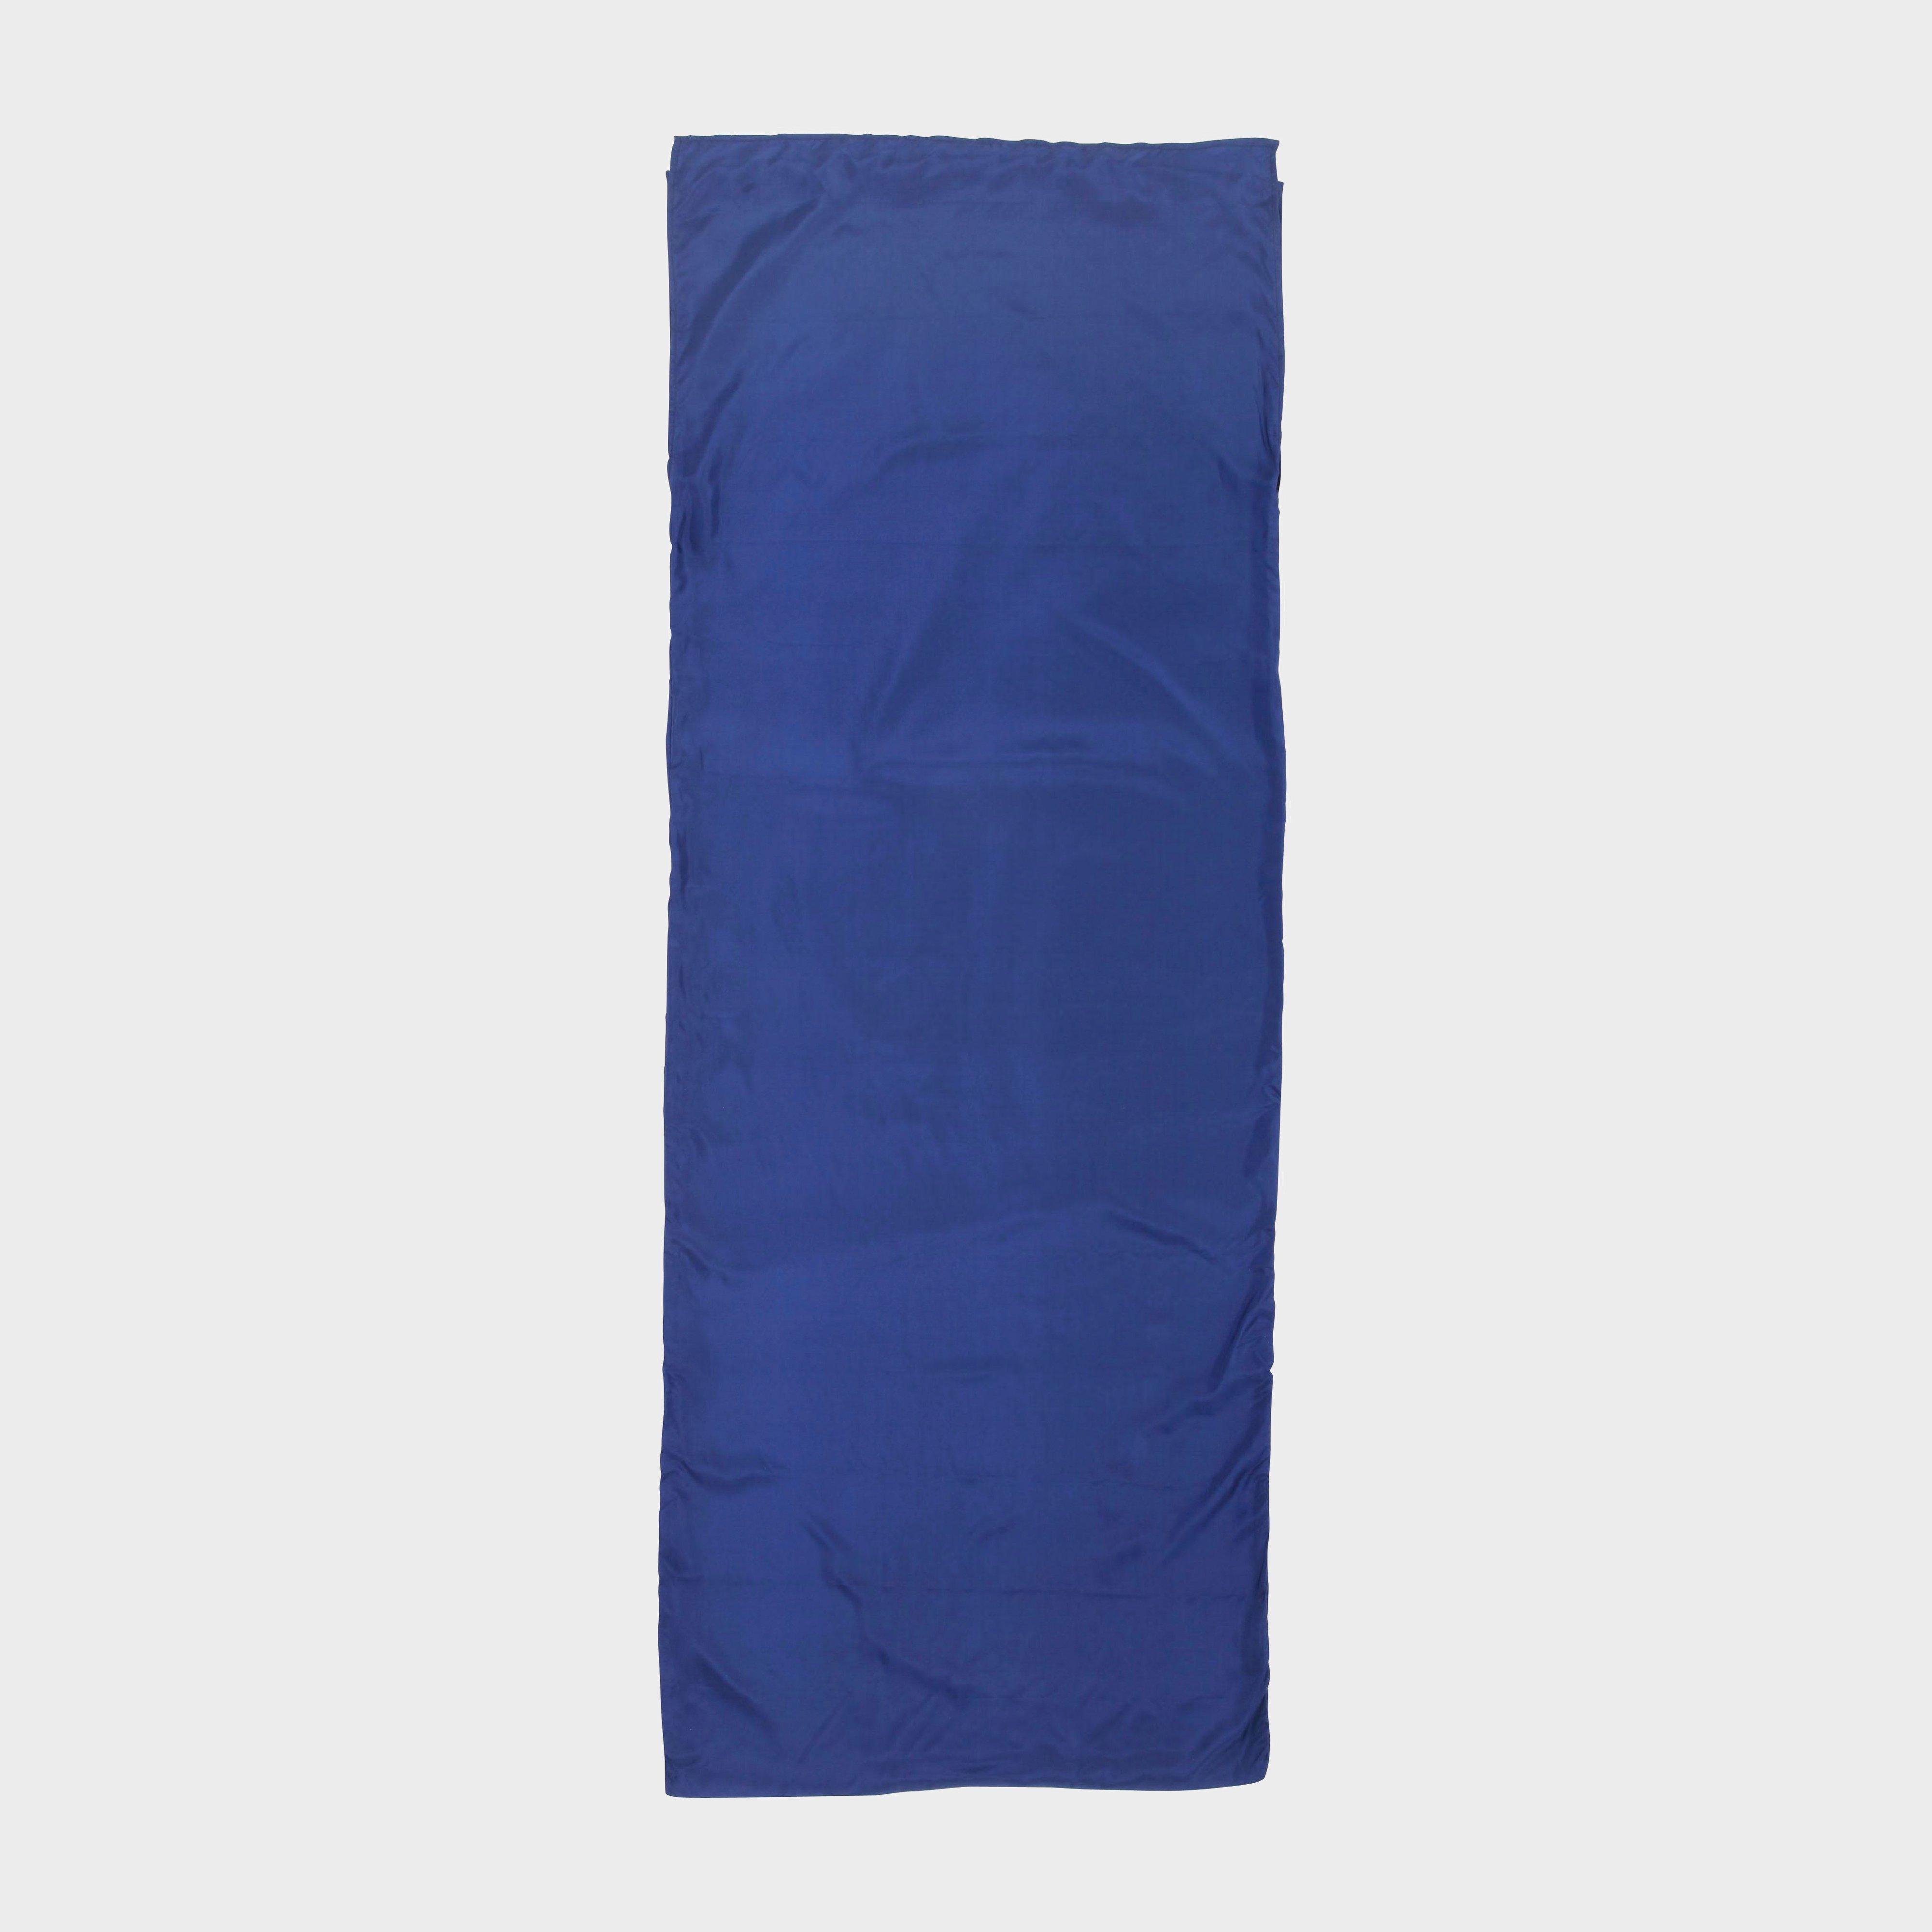 Eurohike Silk Rectangle Sleeping Bag Liner - Navy, Navy